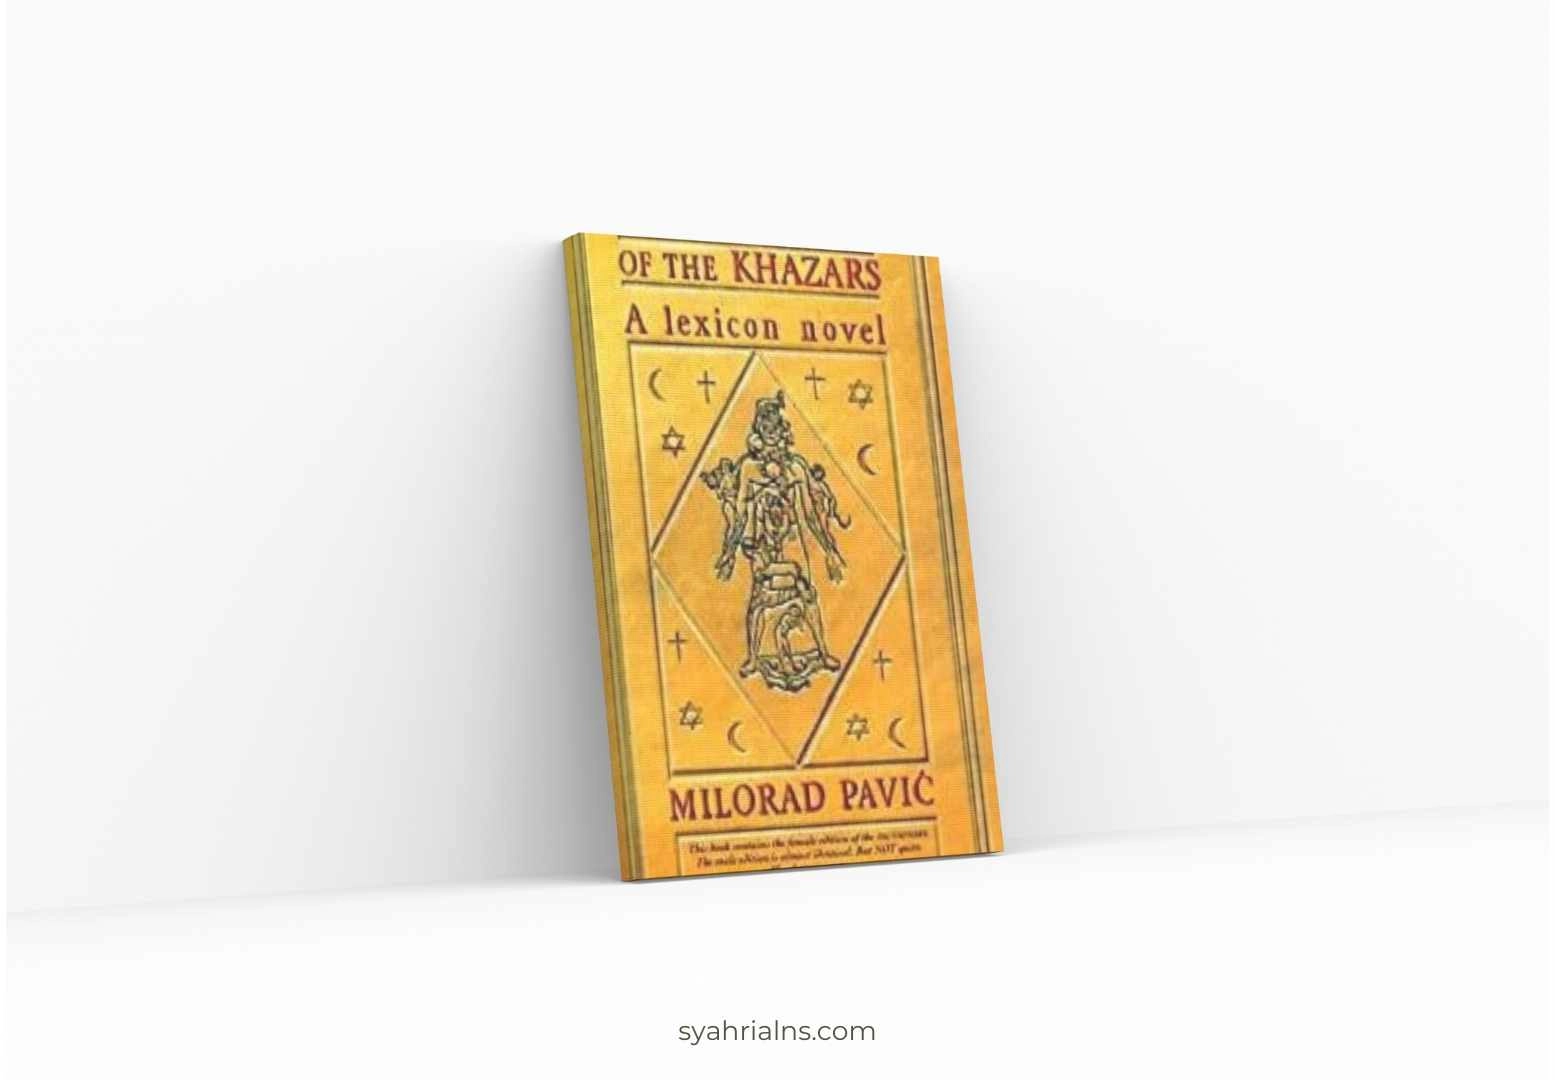 Dictionary of the Khazars by Milorad Pavac